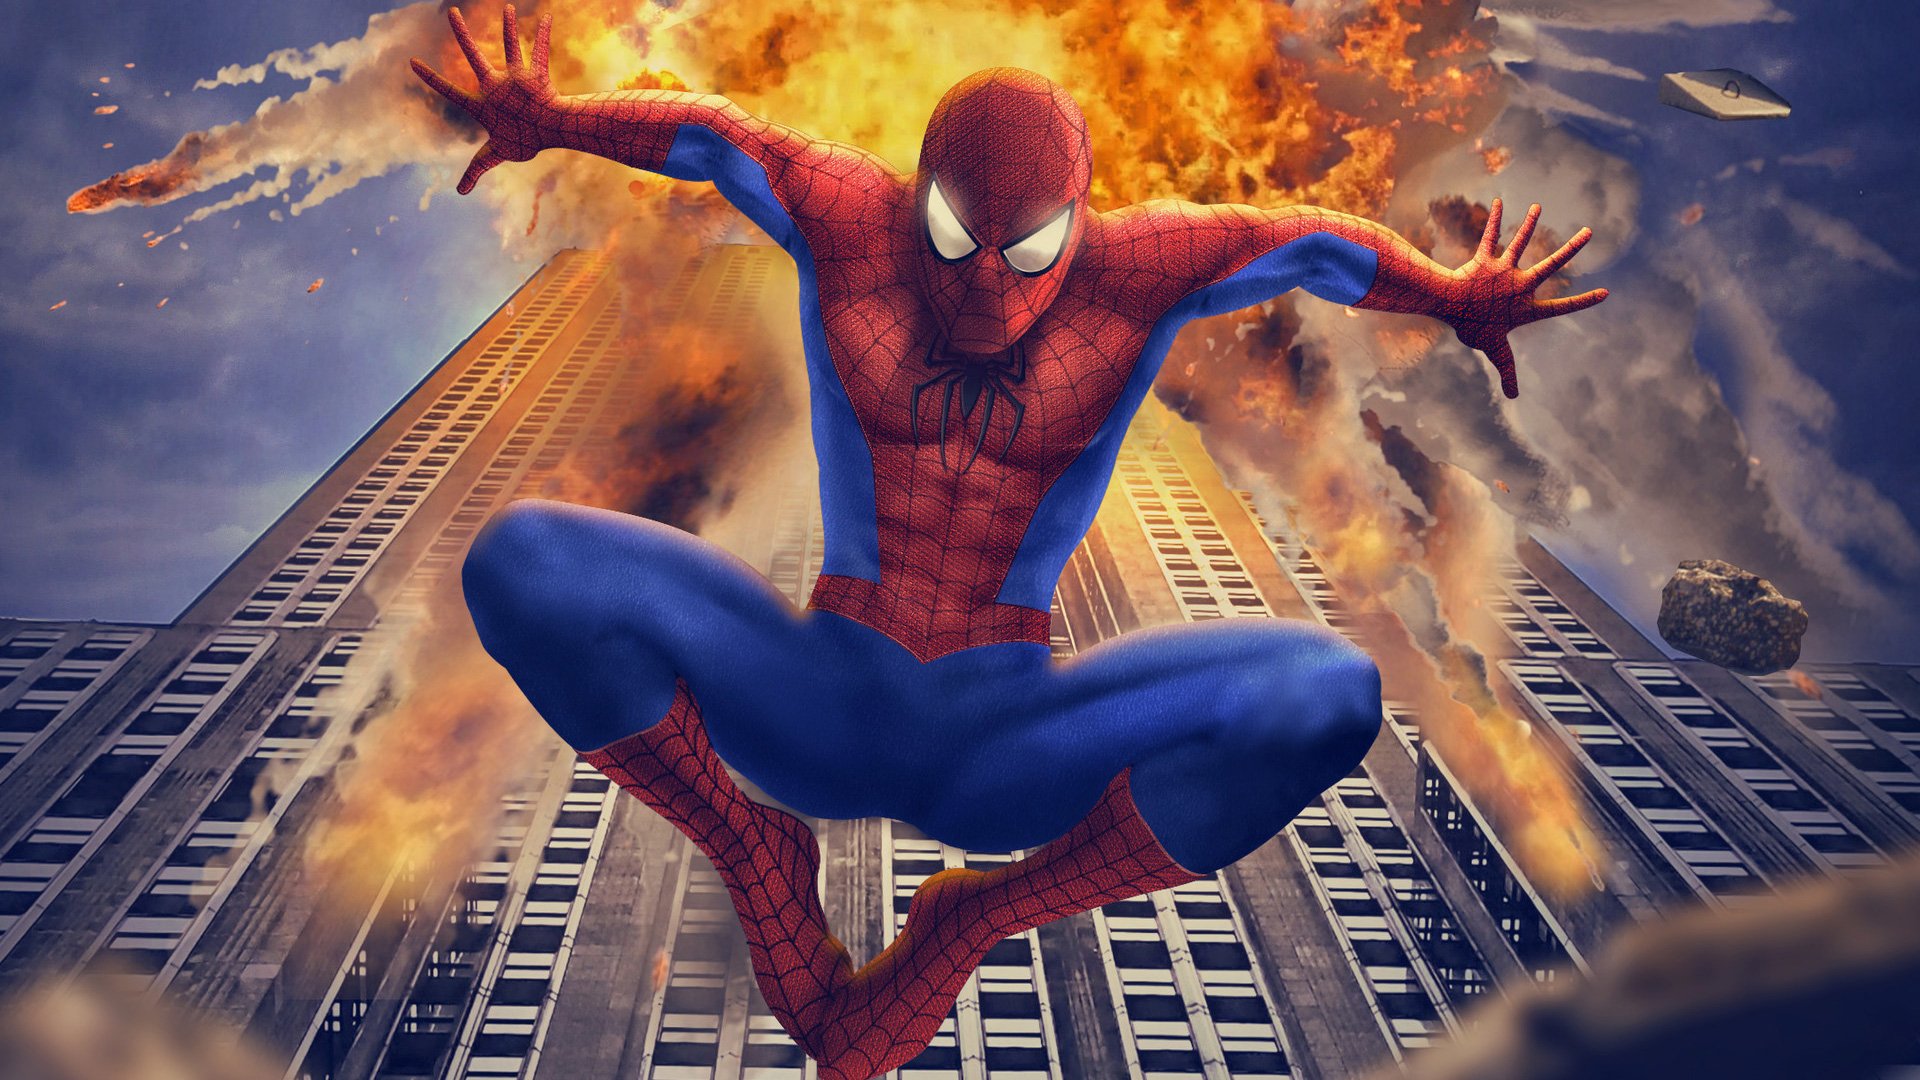 Spider-Man HD Wallpaper Background Image 1920x1080.